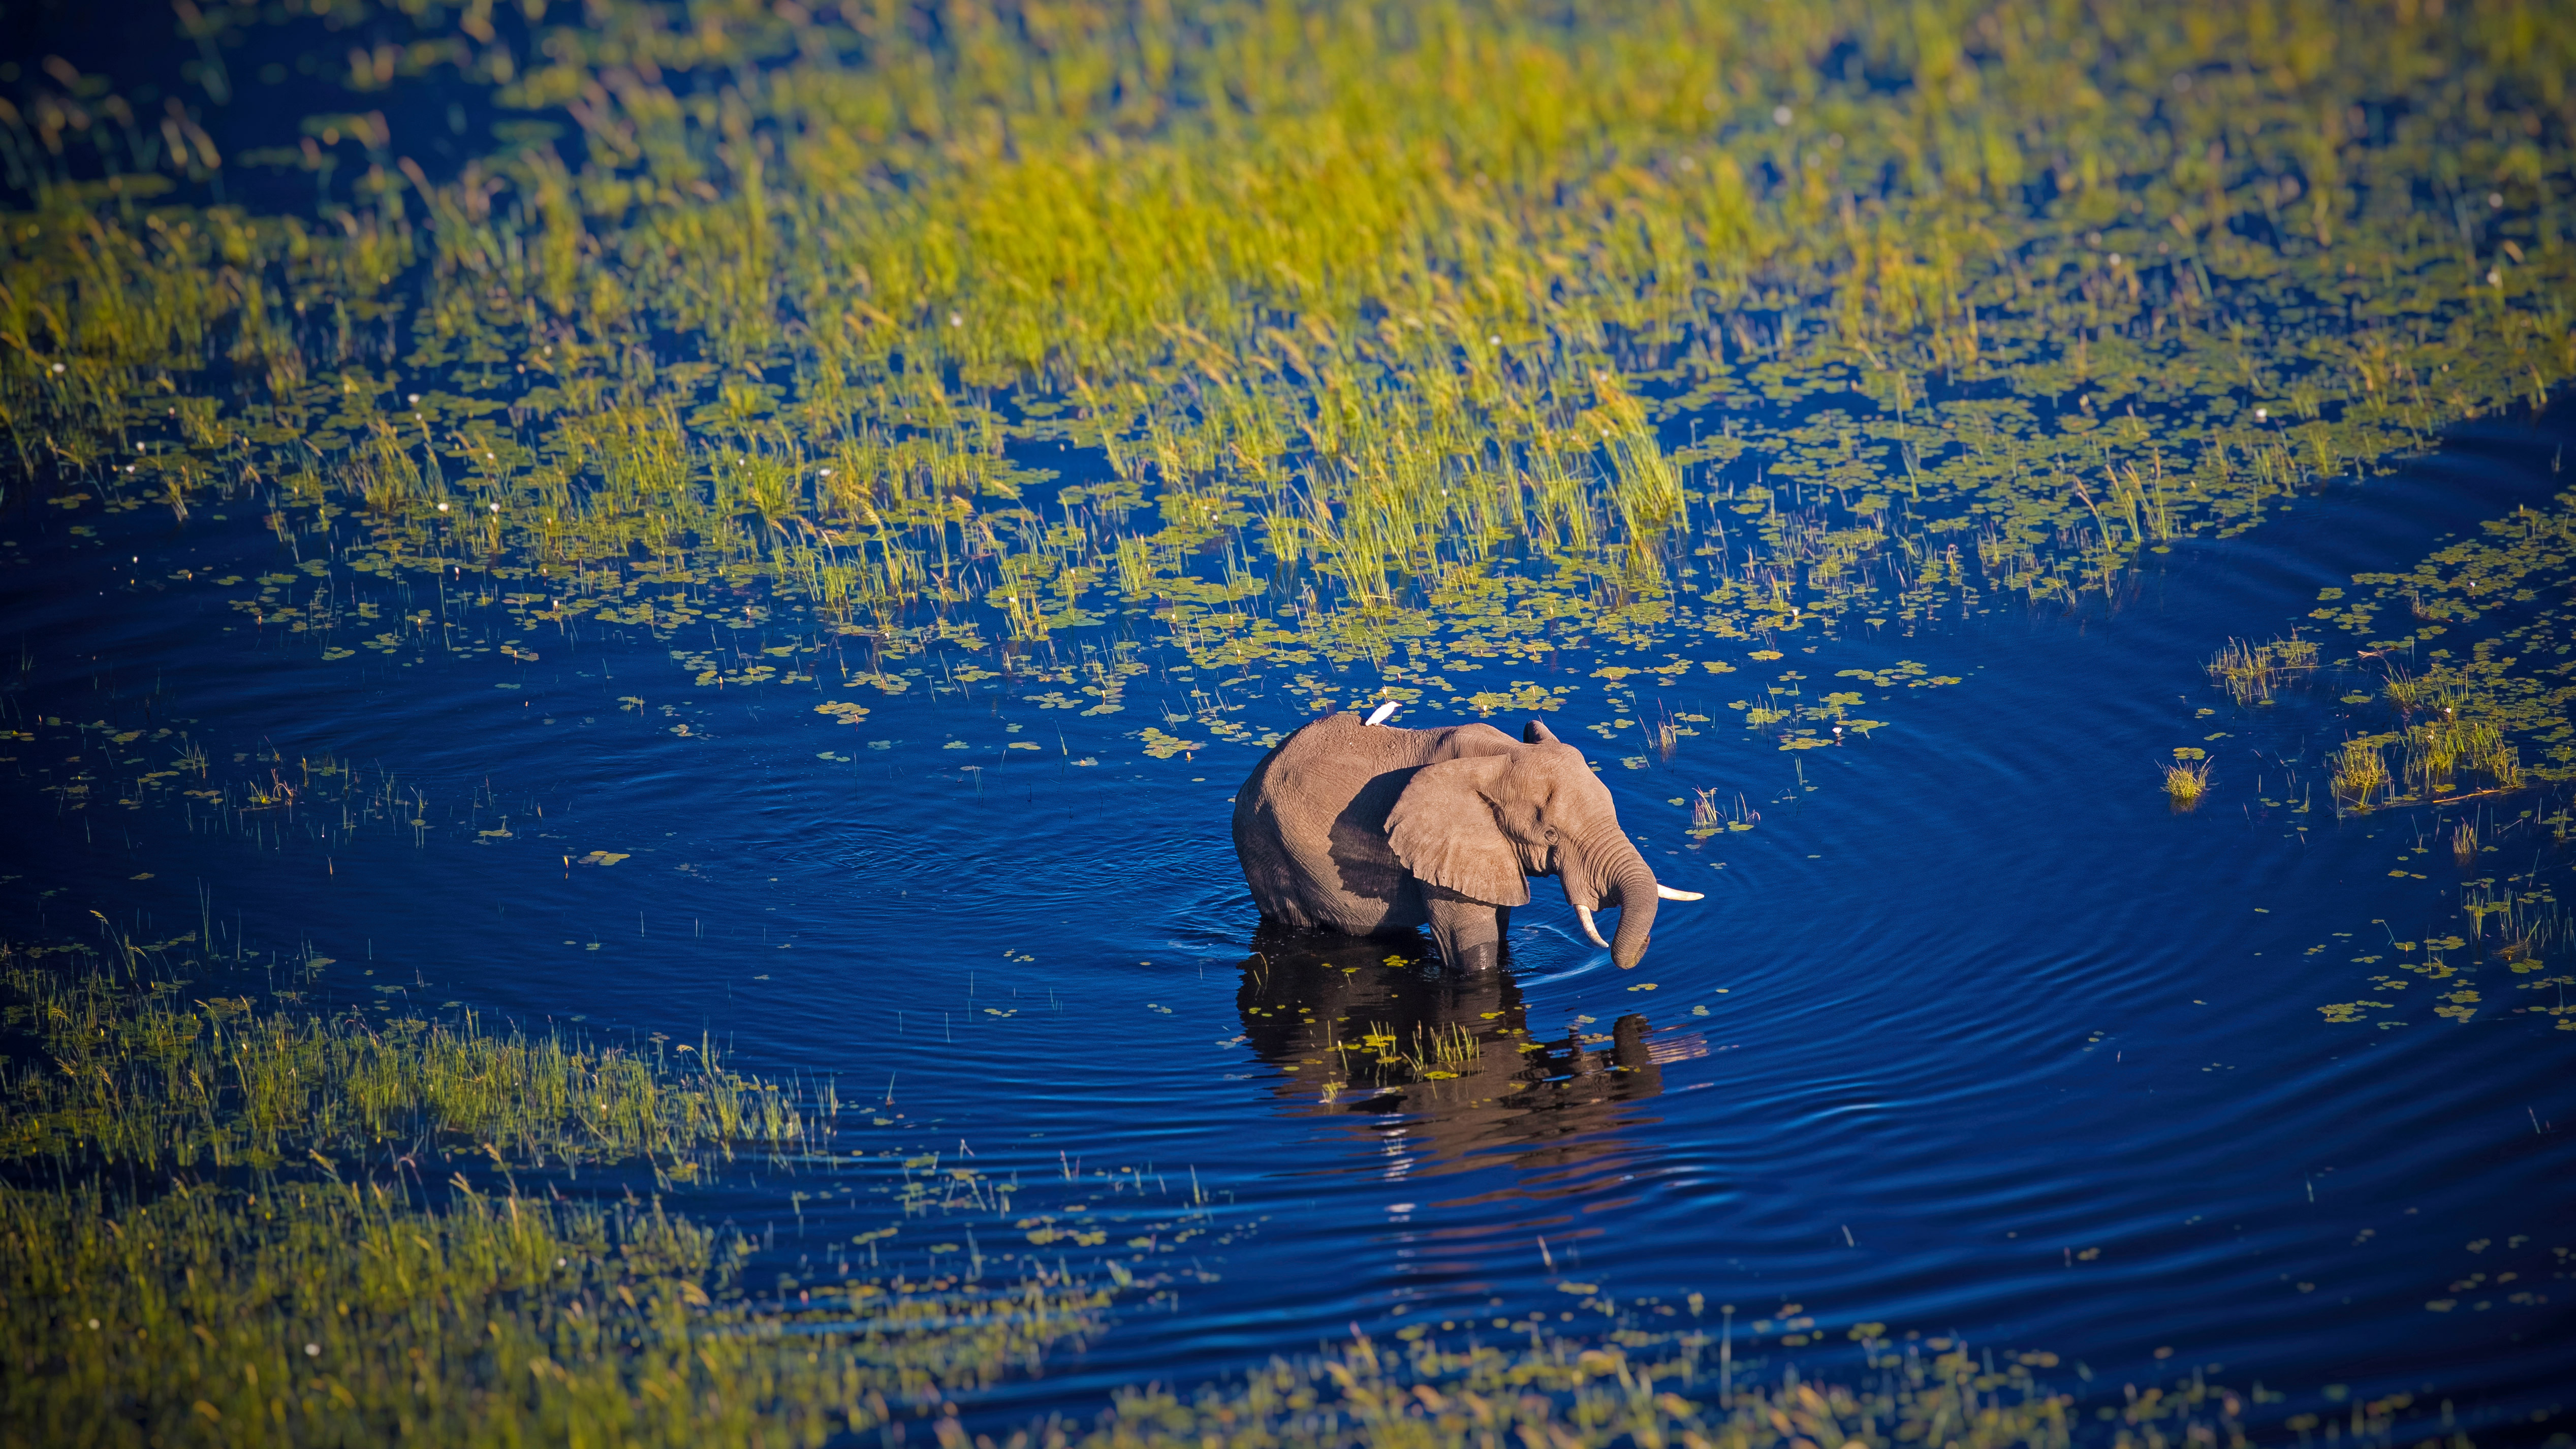 Elephant walking in the Okavango River, Botswana by Markus Pavlowsky